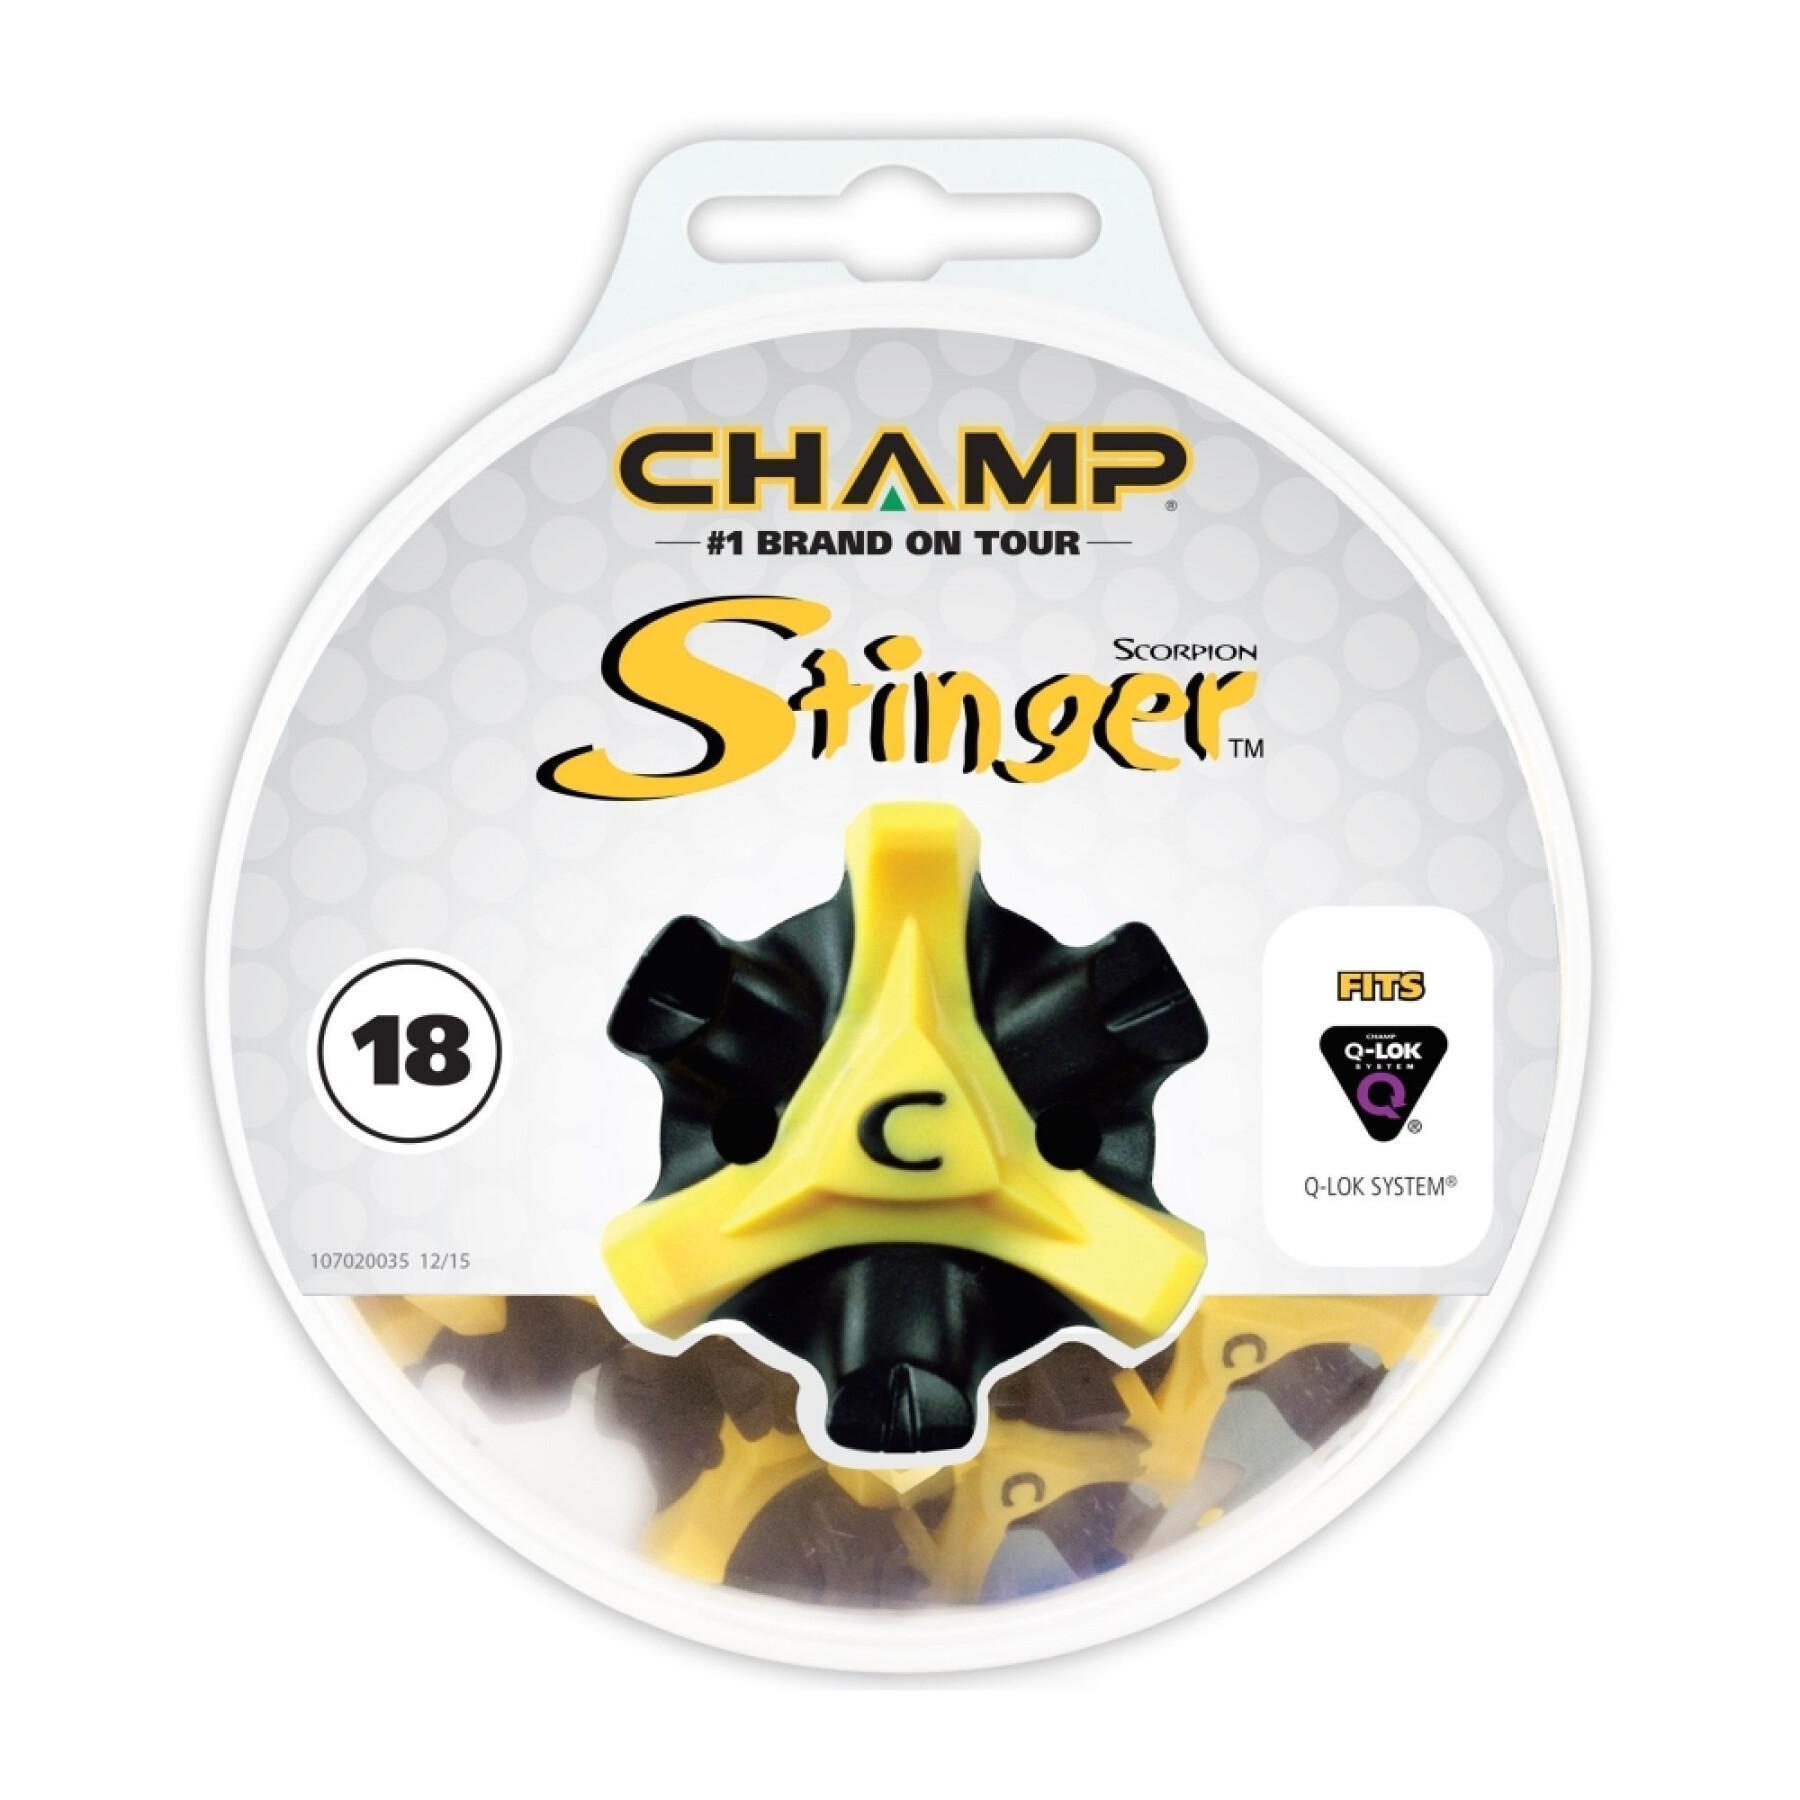 Grampo Champ Stinger fast twist 3,0 disk